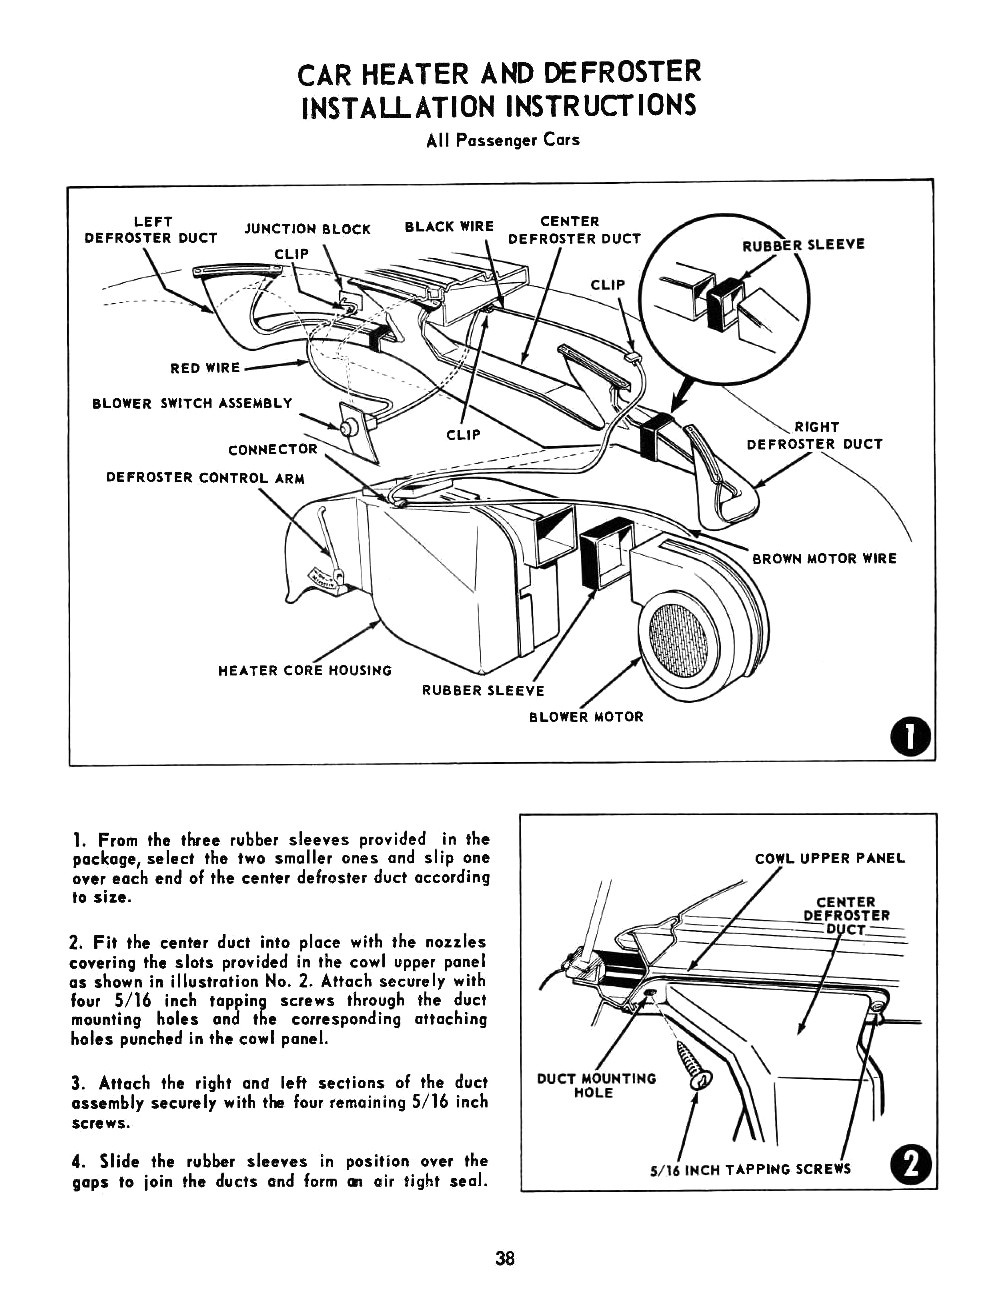 1955_Chevrolet_Acc_Manual-38